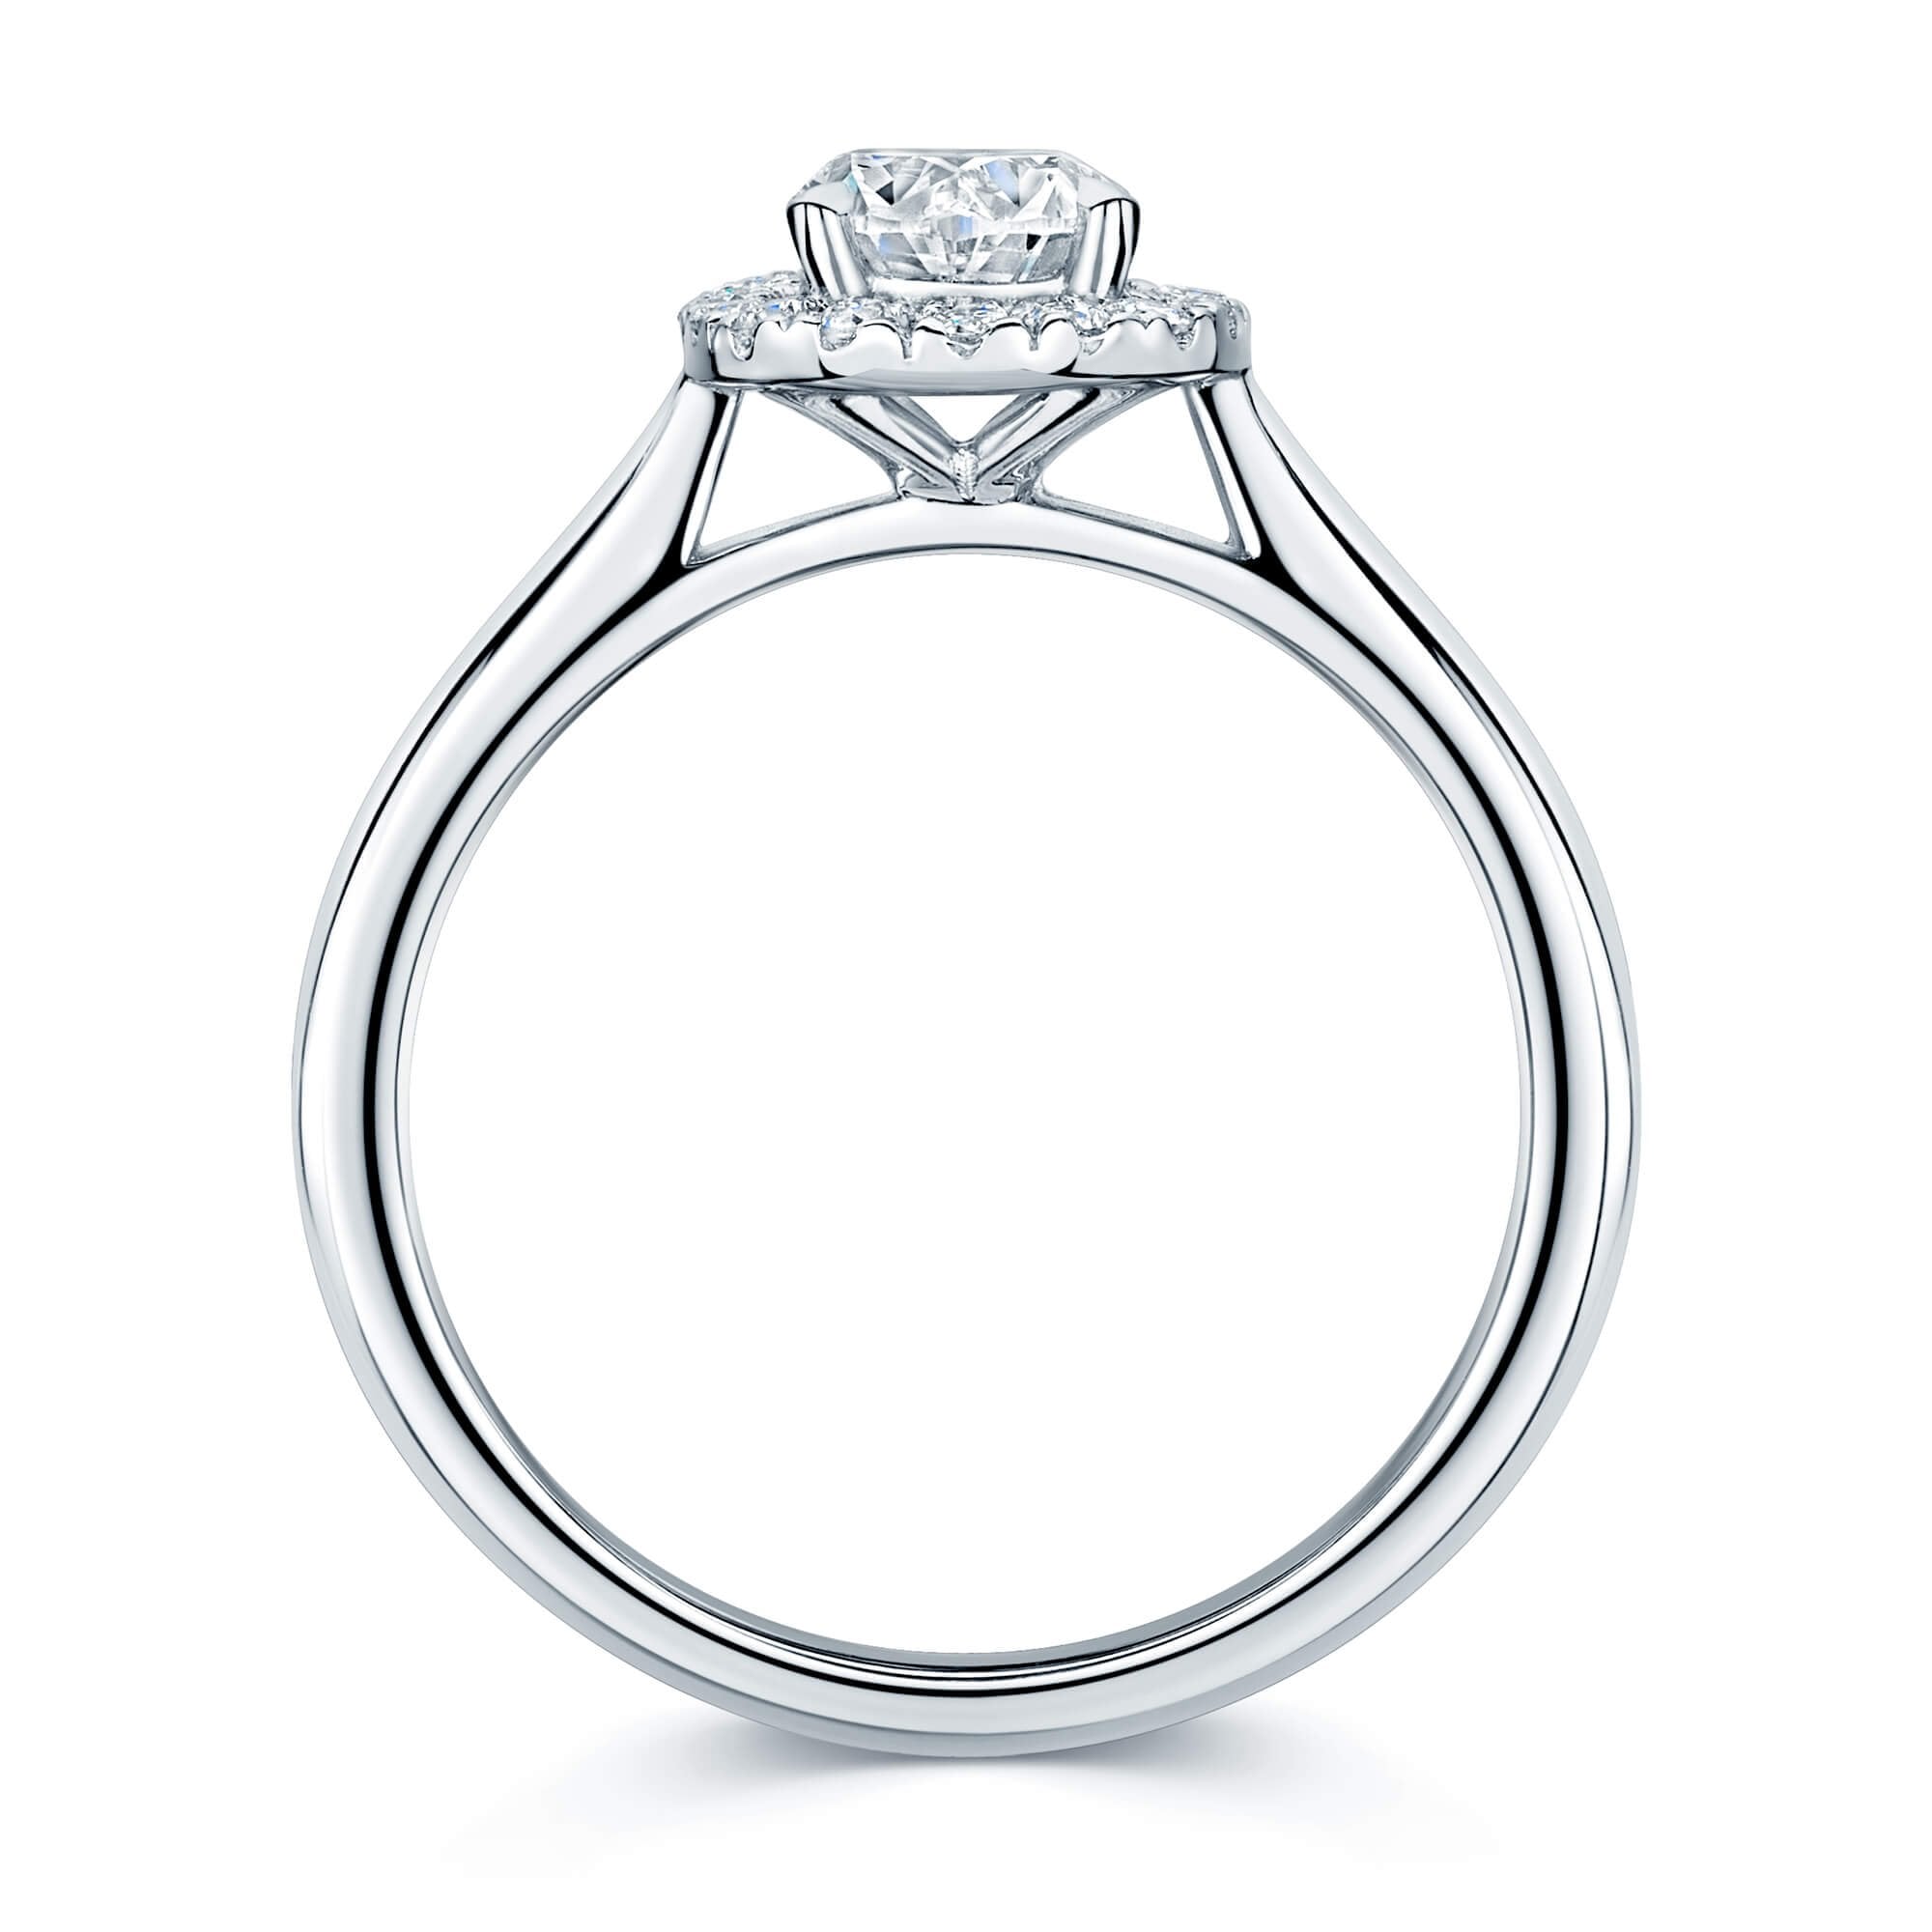 Platinum GIA Certificated Oval Diamond Ring With A Diamond Halo Surround